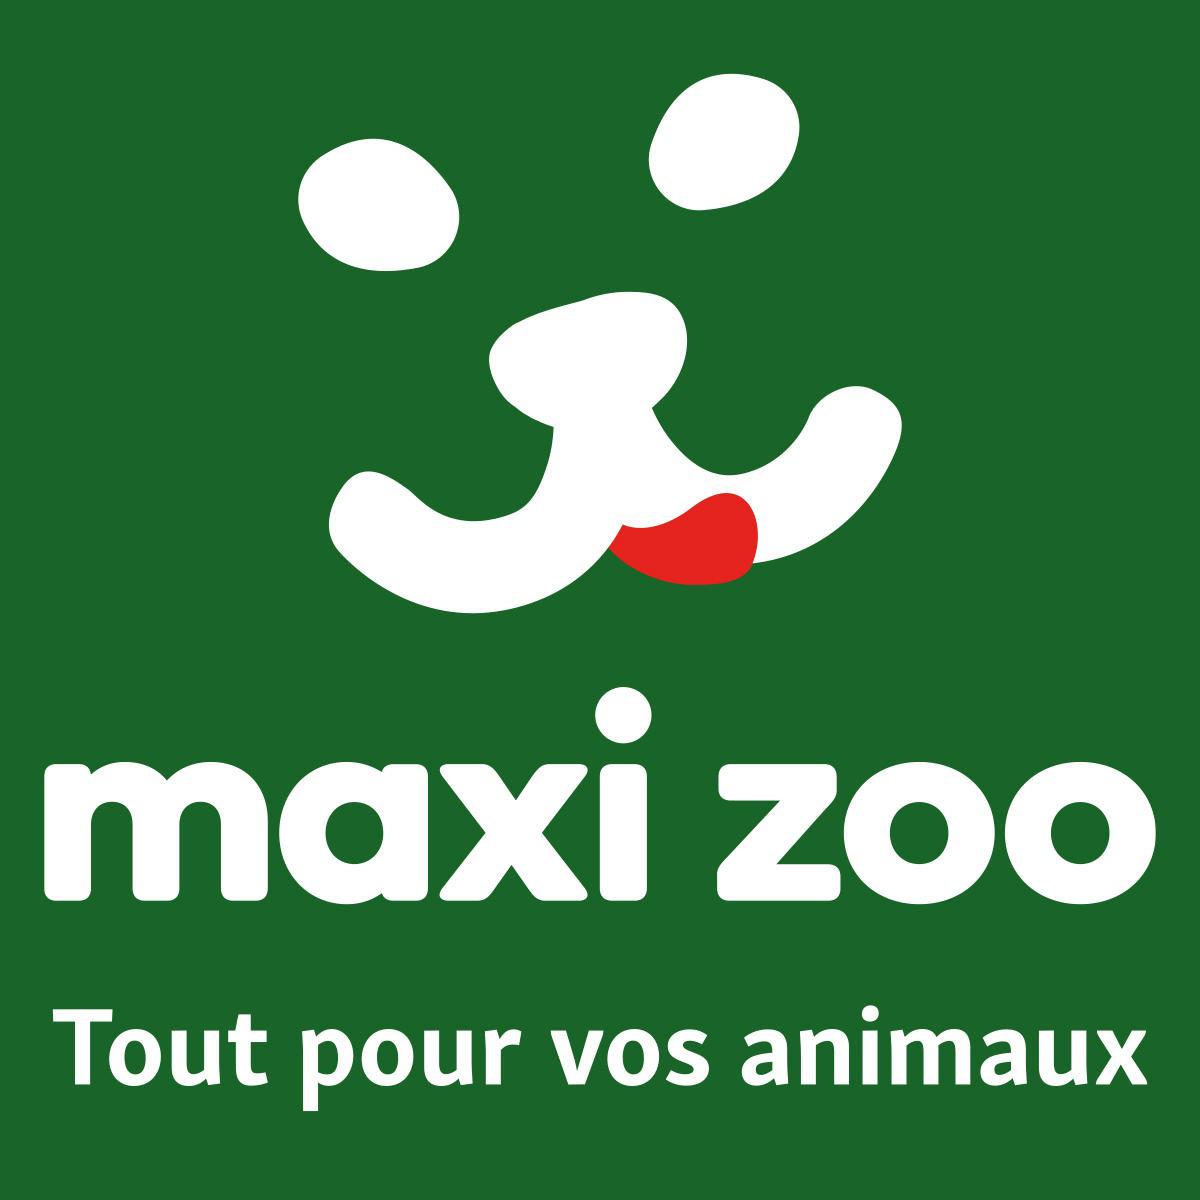 Maxi Zoo Bruay-la-Buissière Logo